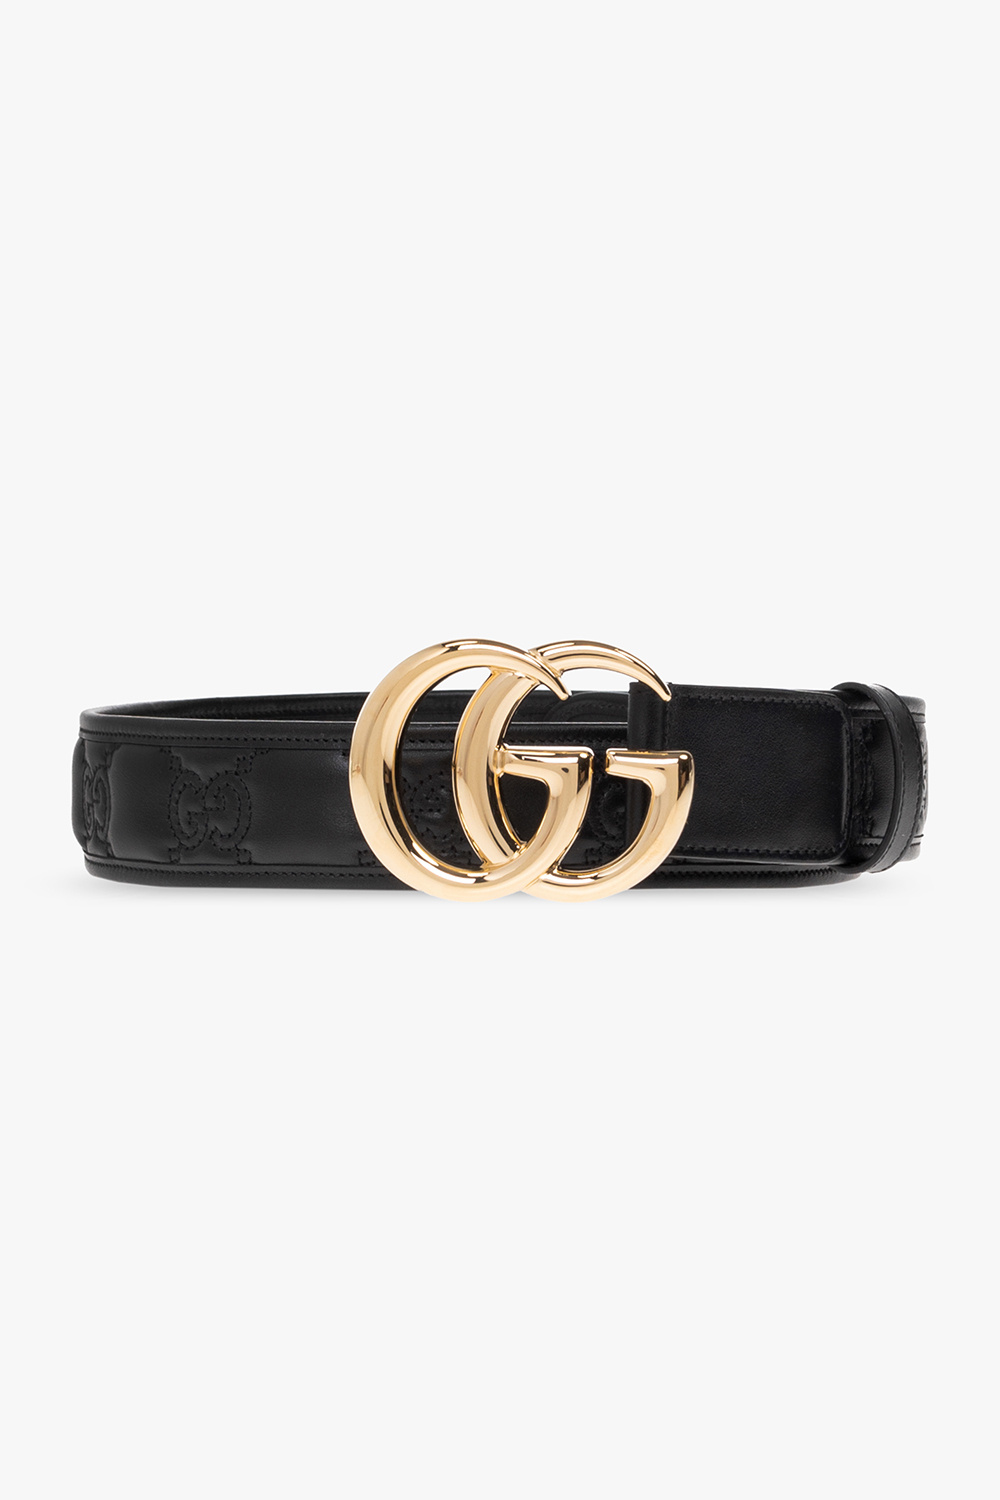 Gucci Leather belt, Women's Accessories